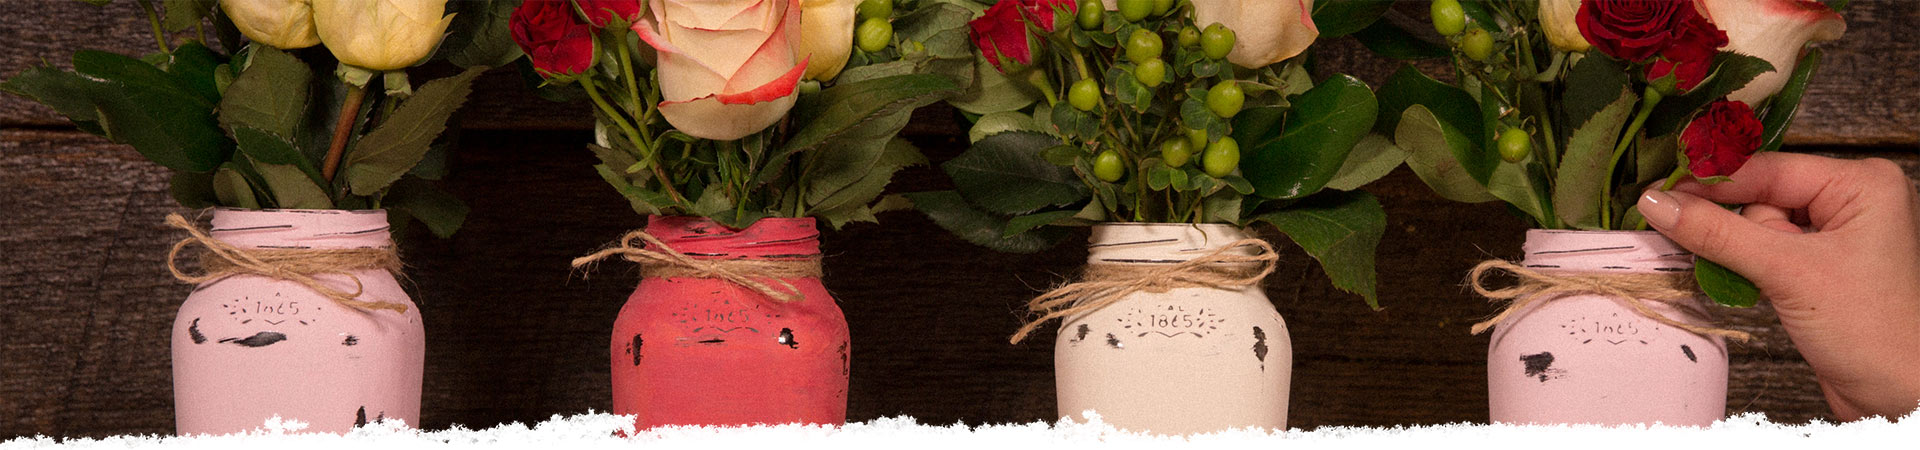 How To Repurpose Your Bertolli<sup>®</sup> Jars Into Flower Vases